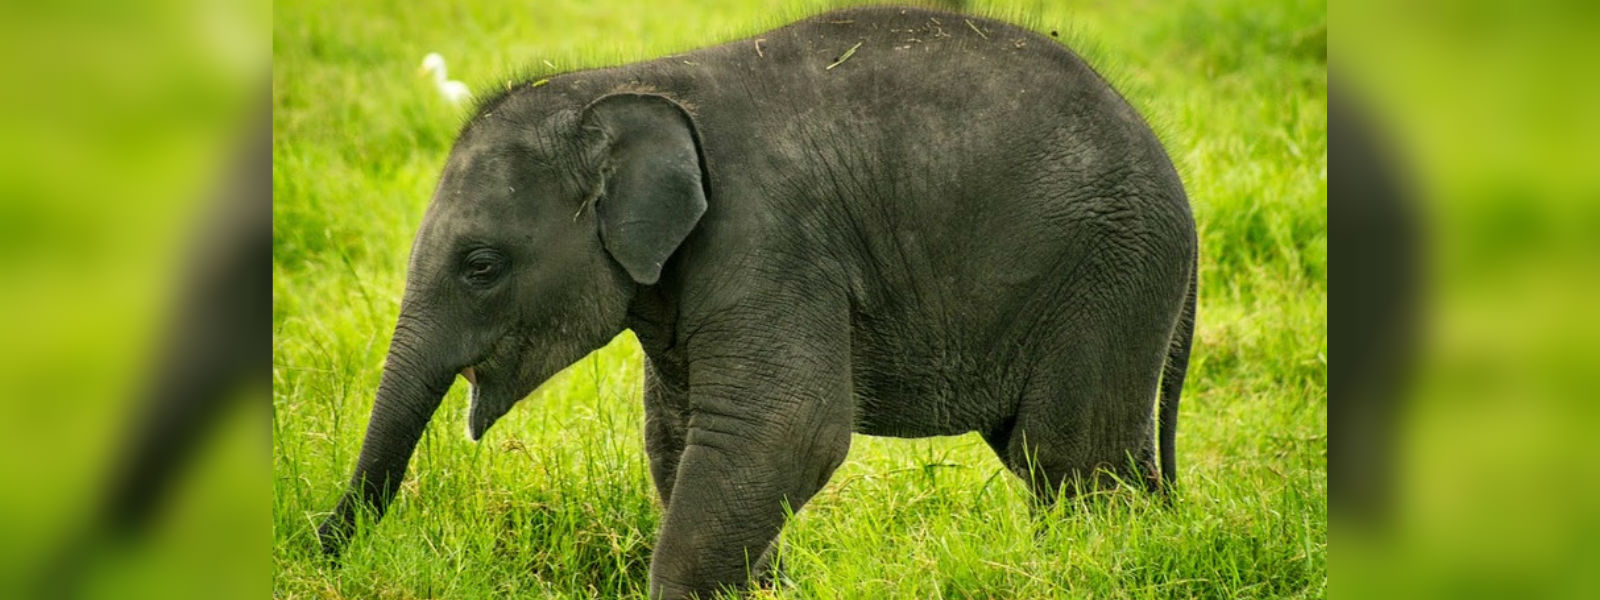 Elephants calves die in Yala due to malnutrition